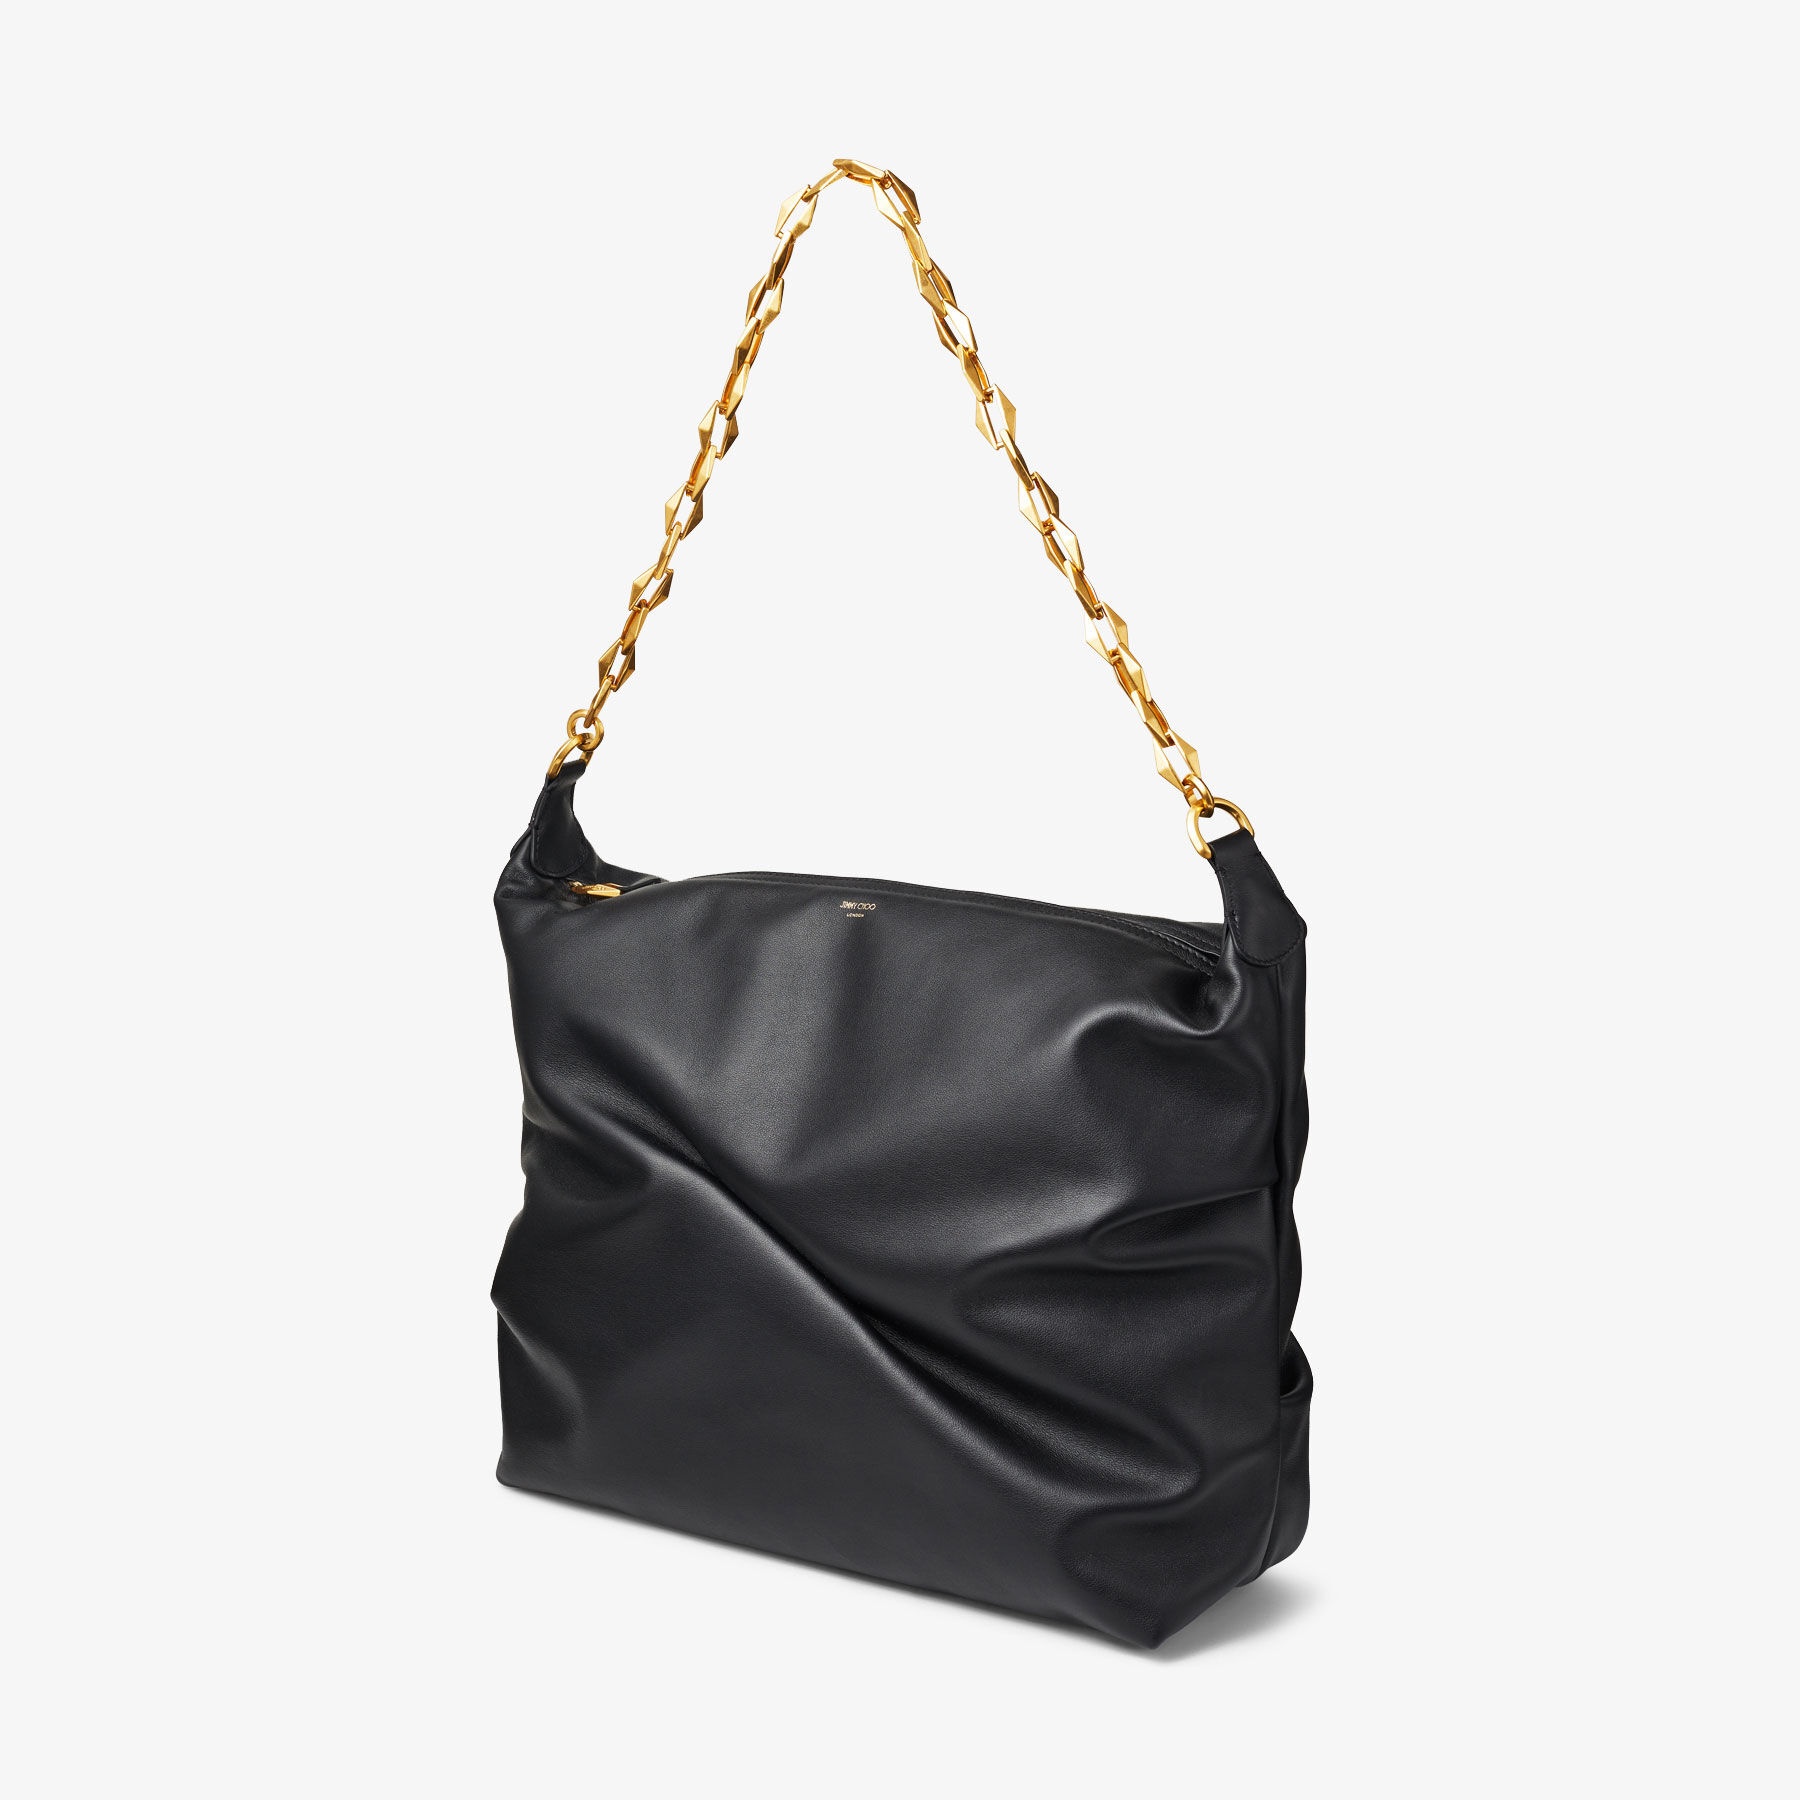 Diamond Soft Hobo M
Black Soft Calf Leather Hobo Bag with Chain Strap - 6